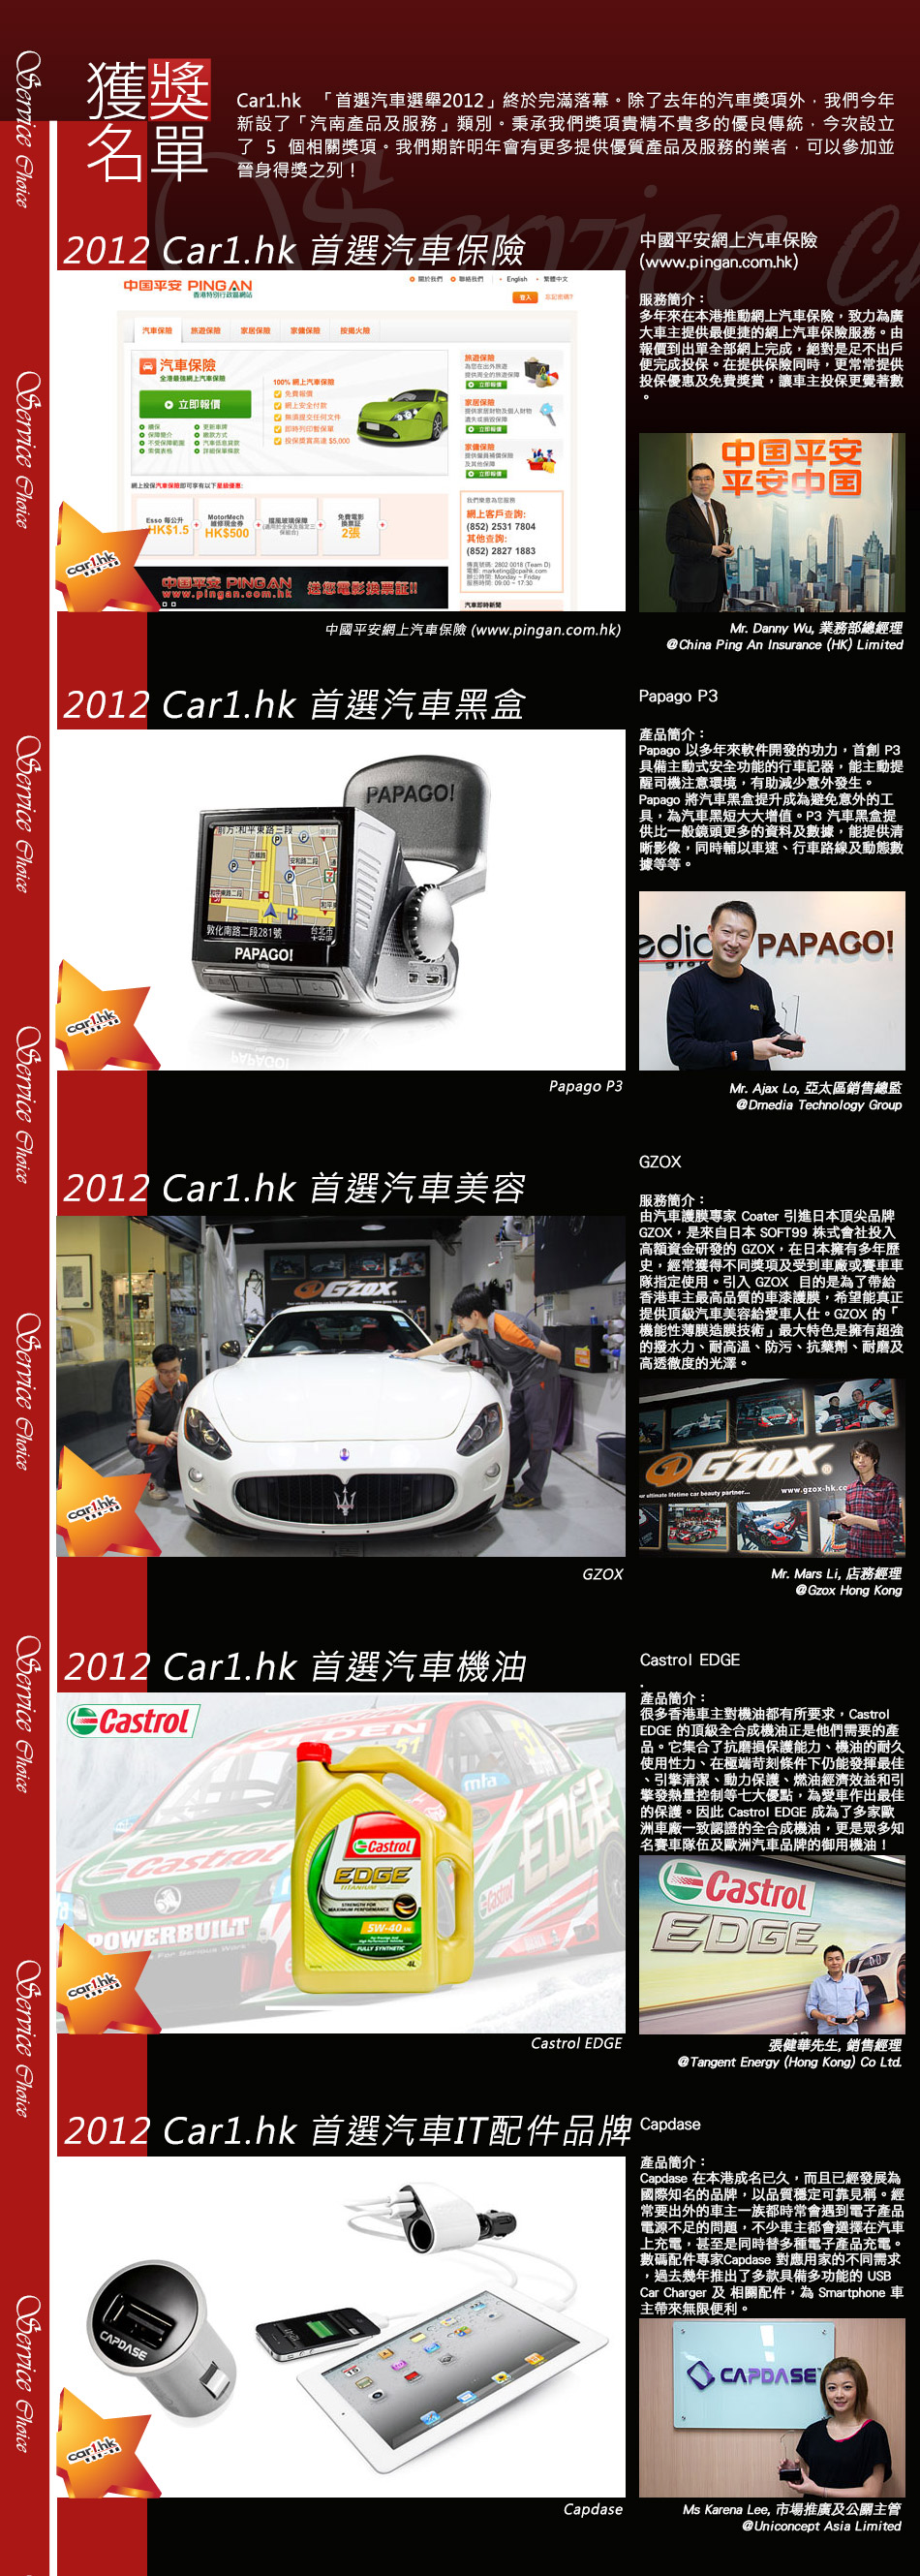 Car1.hk「首選汽車選舉 2012」「Service Choice 編輯首選」